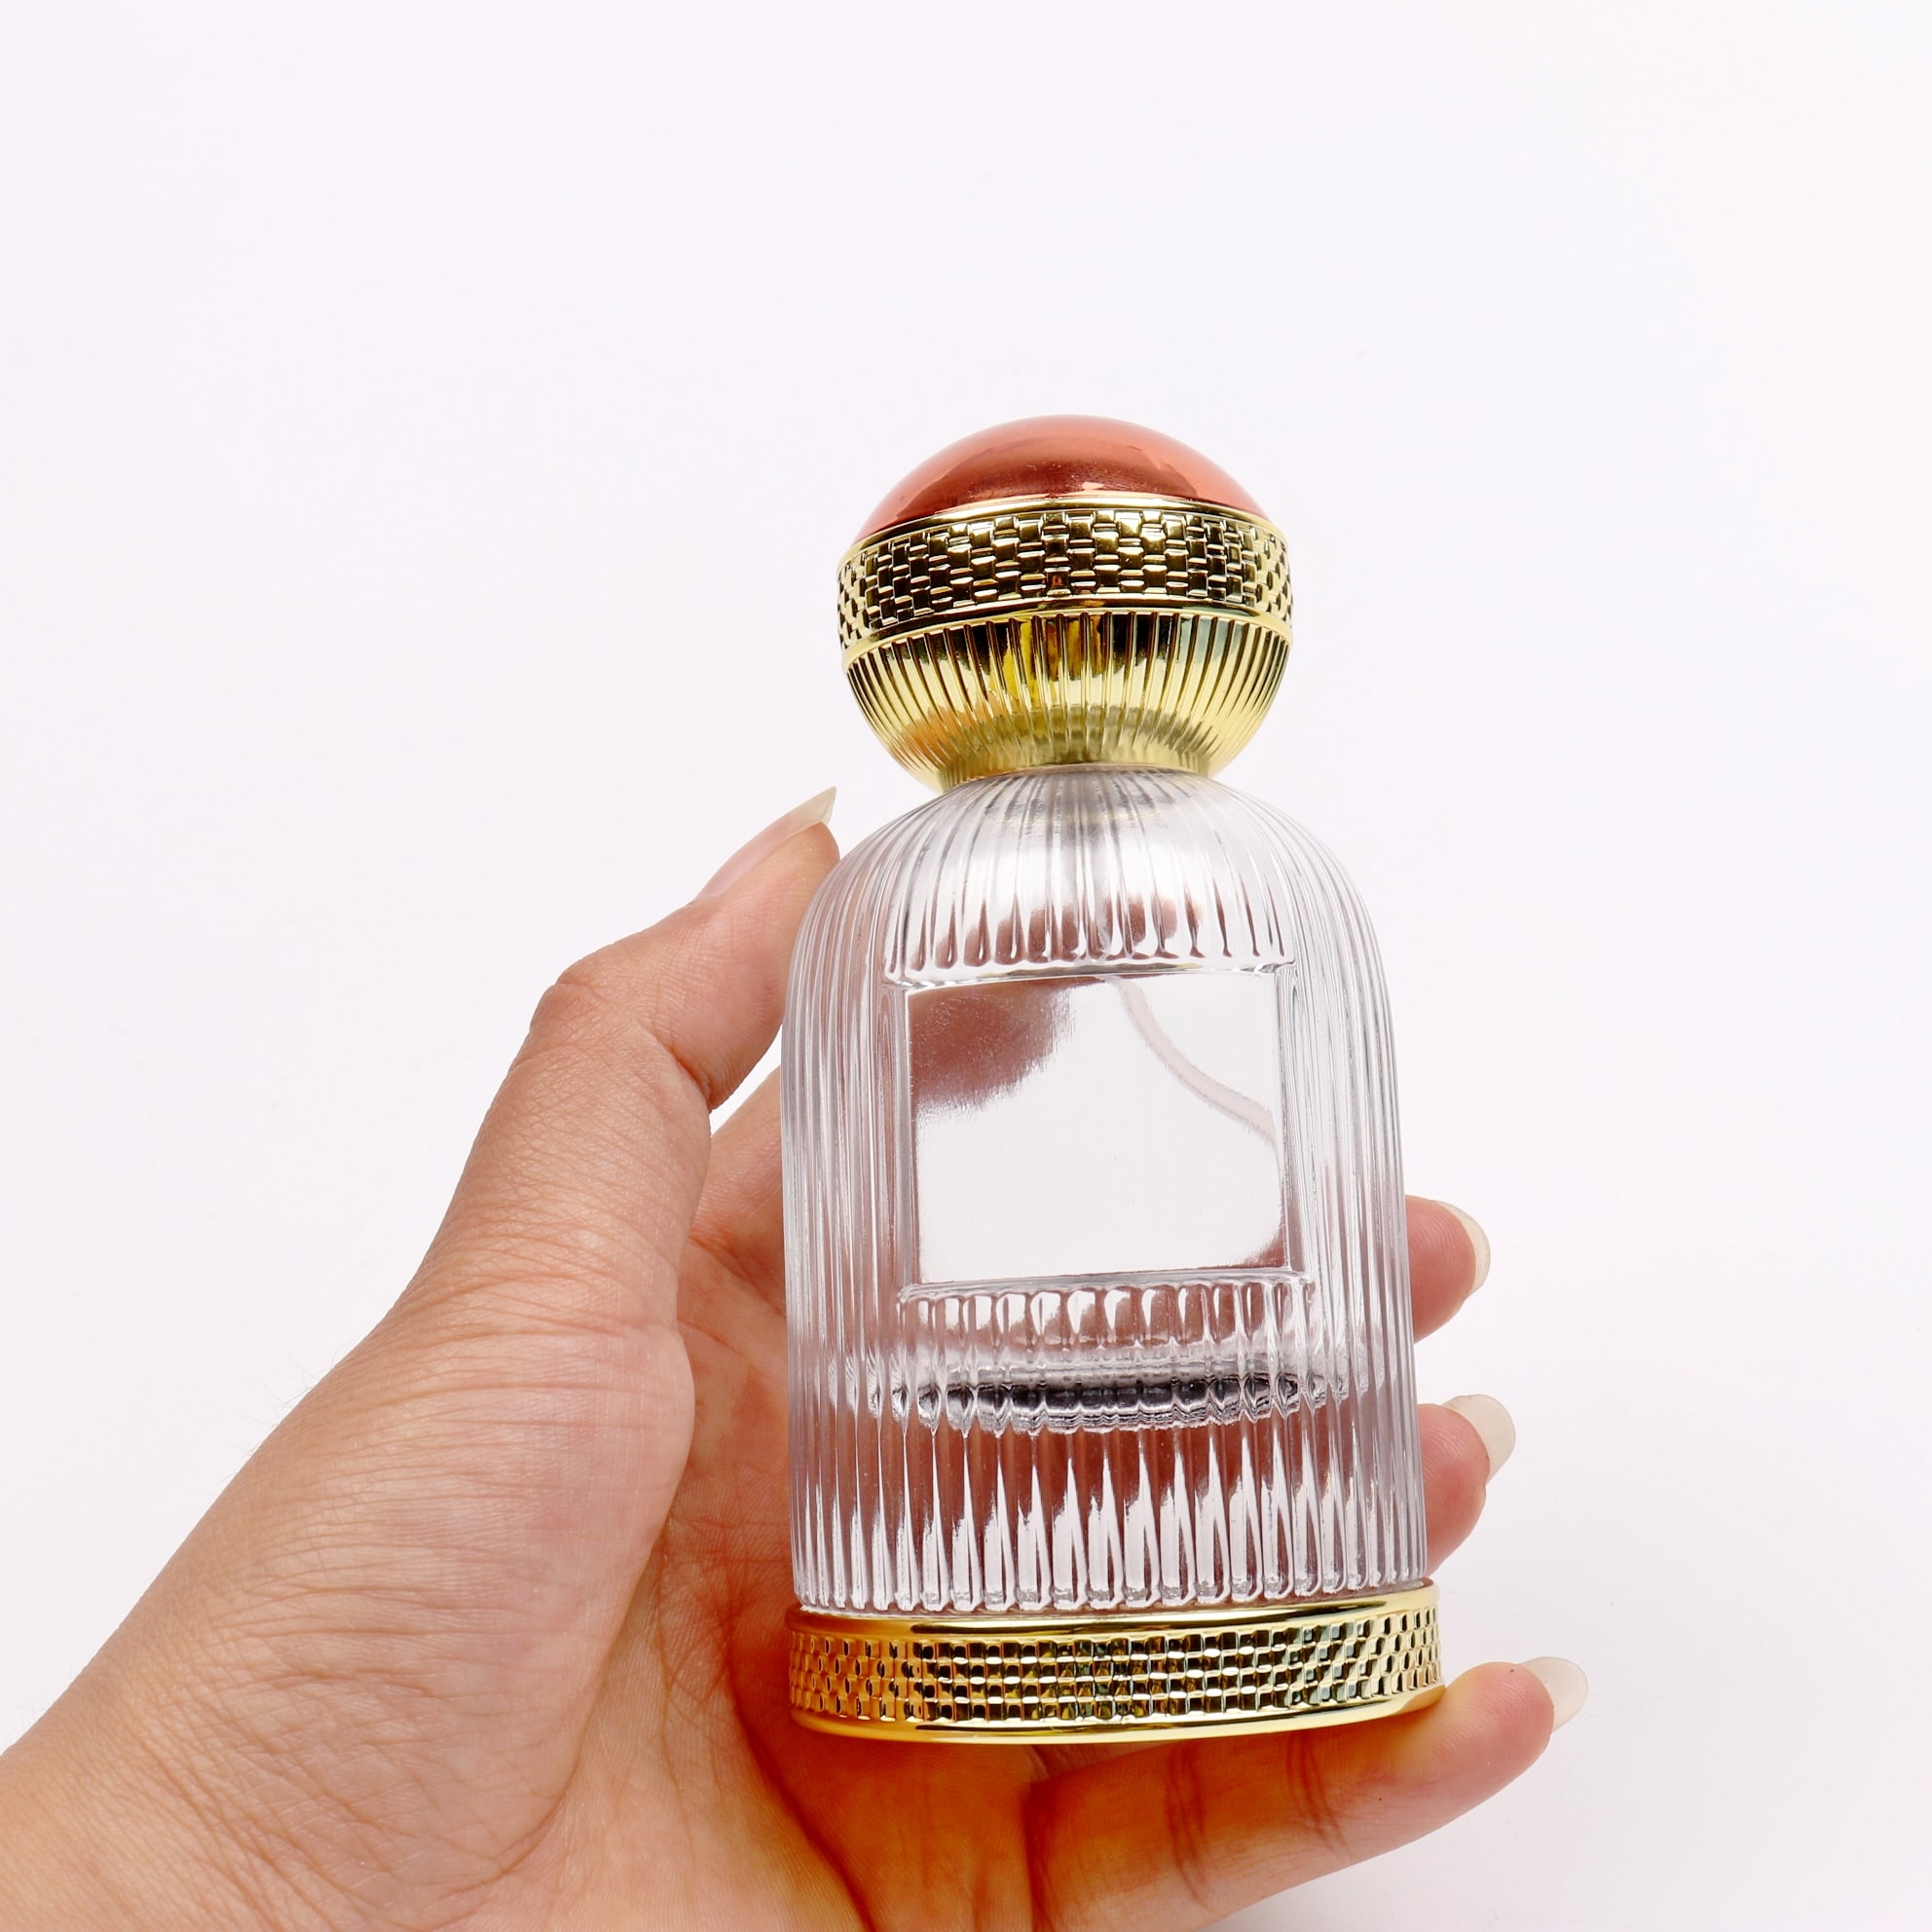 New desigin perfume bottle